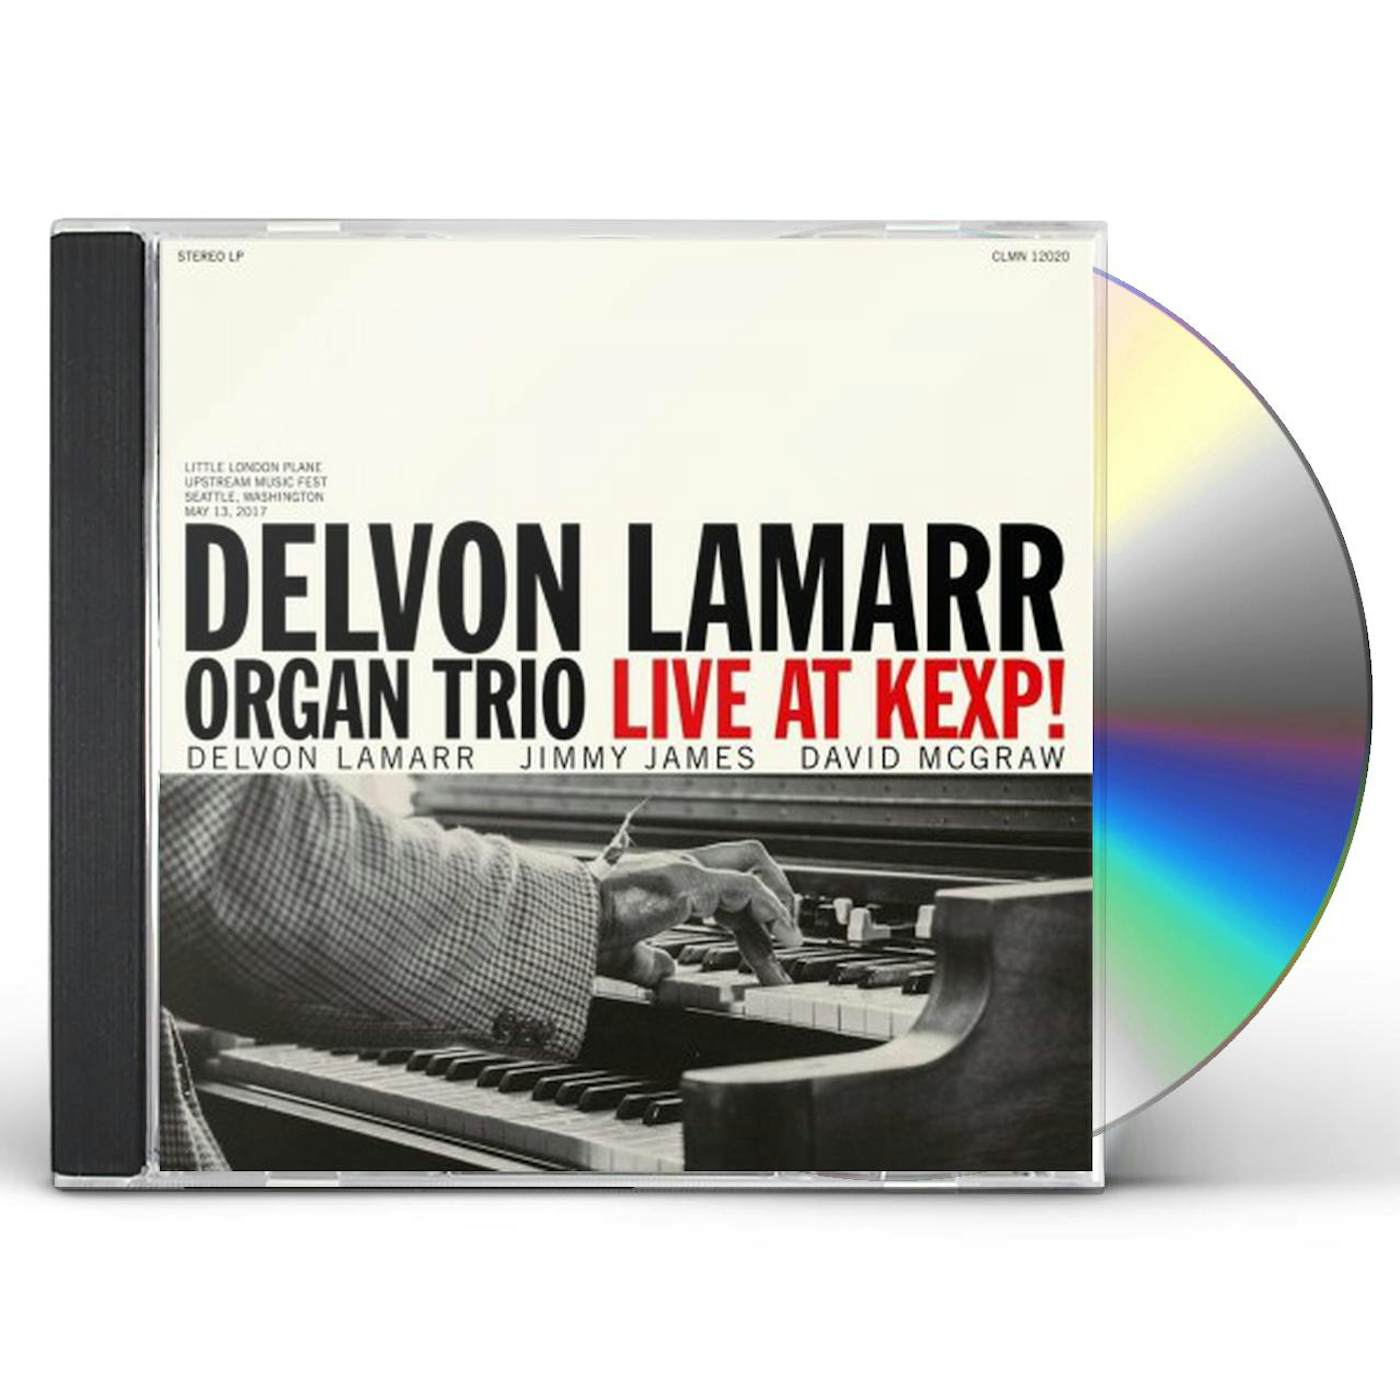 Delvon Lamarr Organ Trio LIVE AT KEXP CD